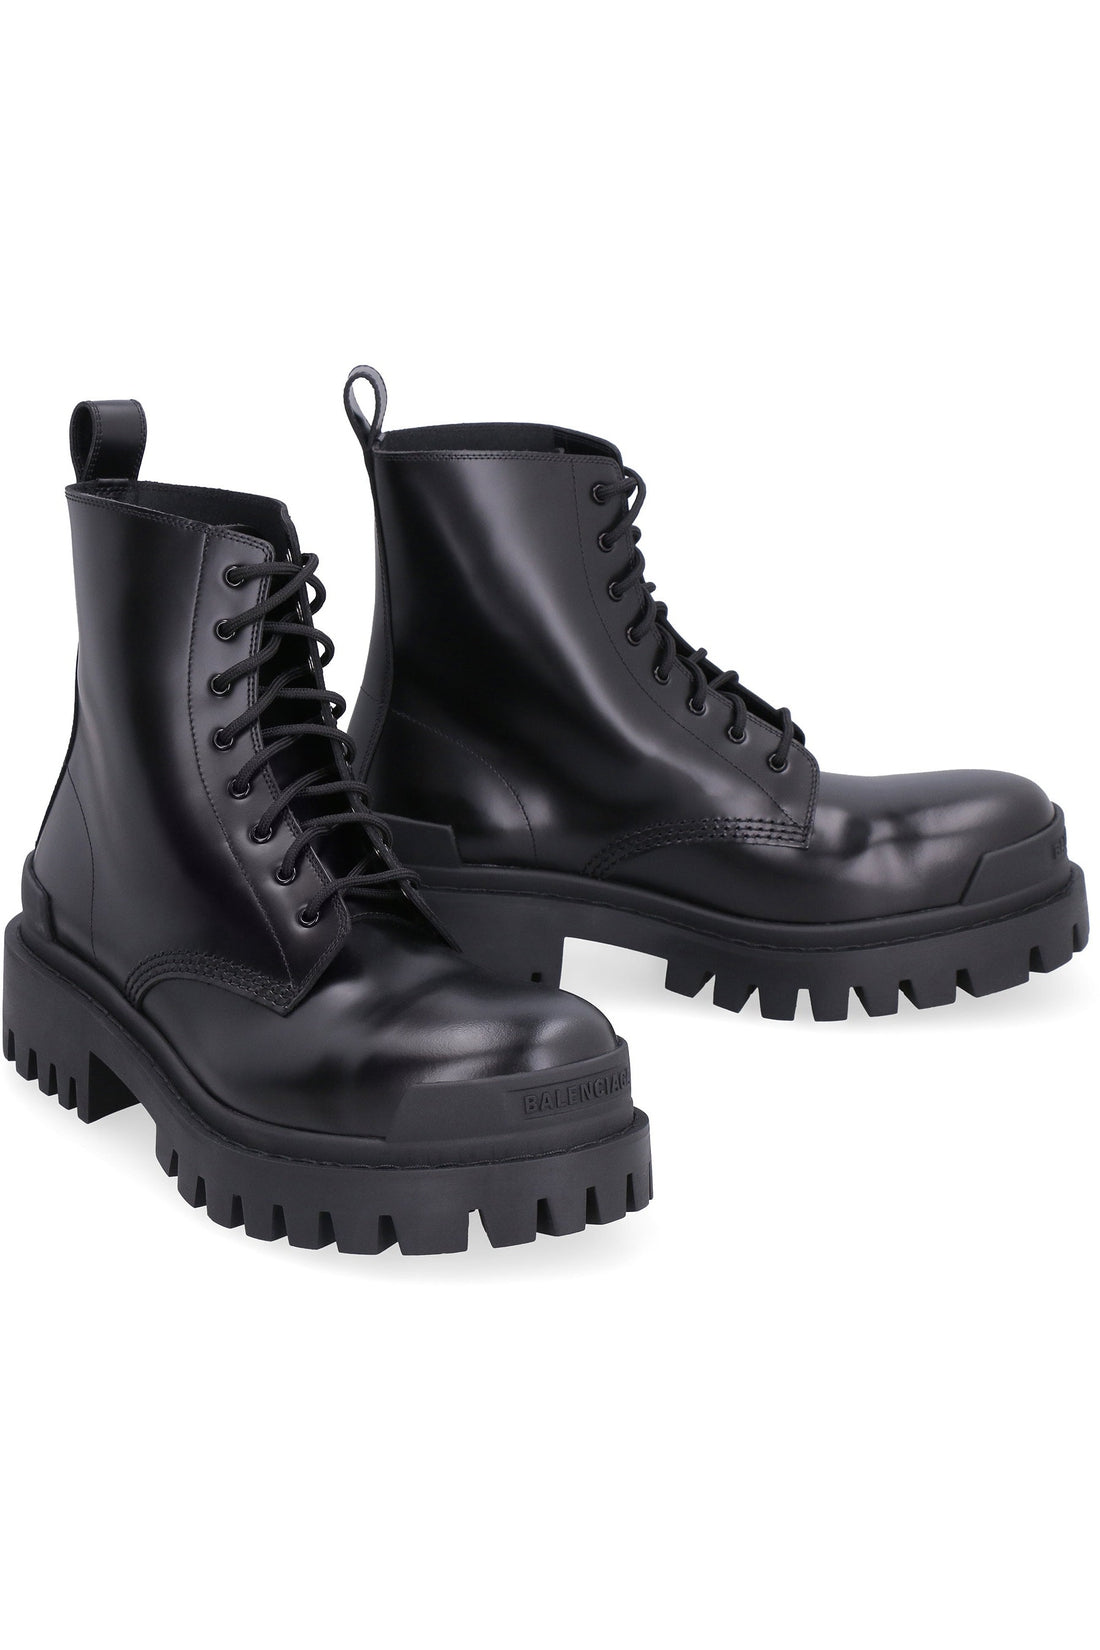 Balenciaga-OUTLET-SALE-Strike leather combat boots-ARCHIVIST